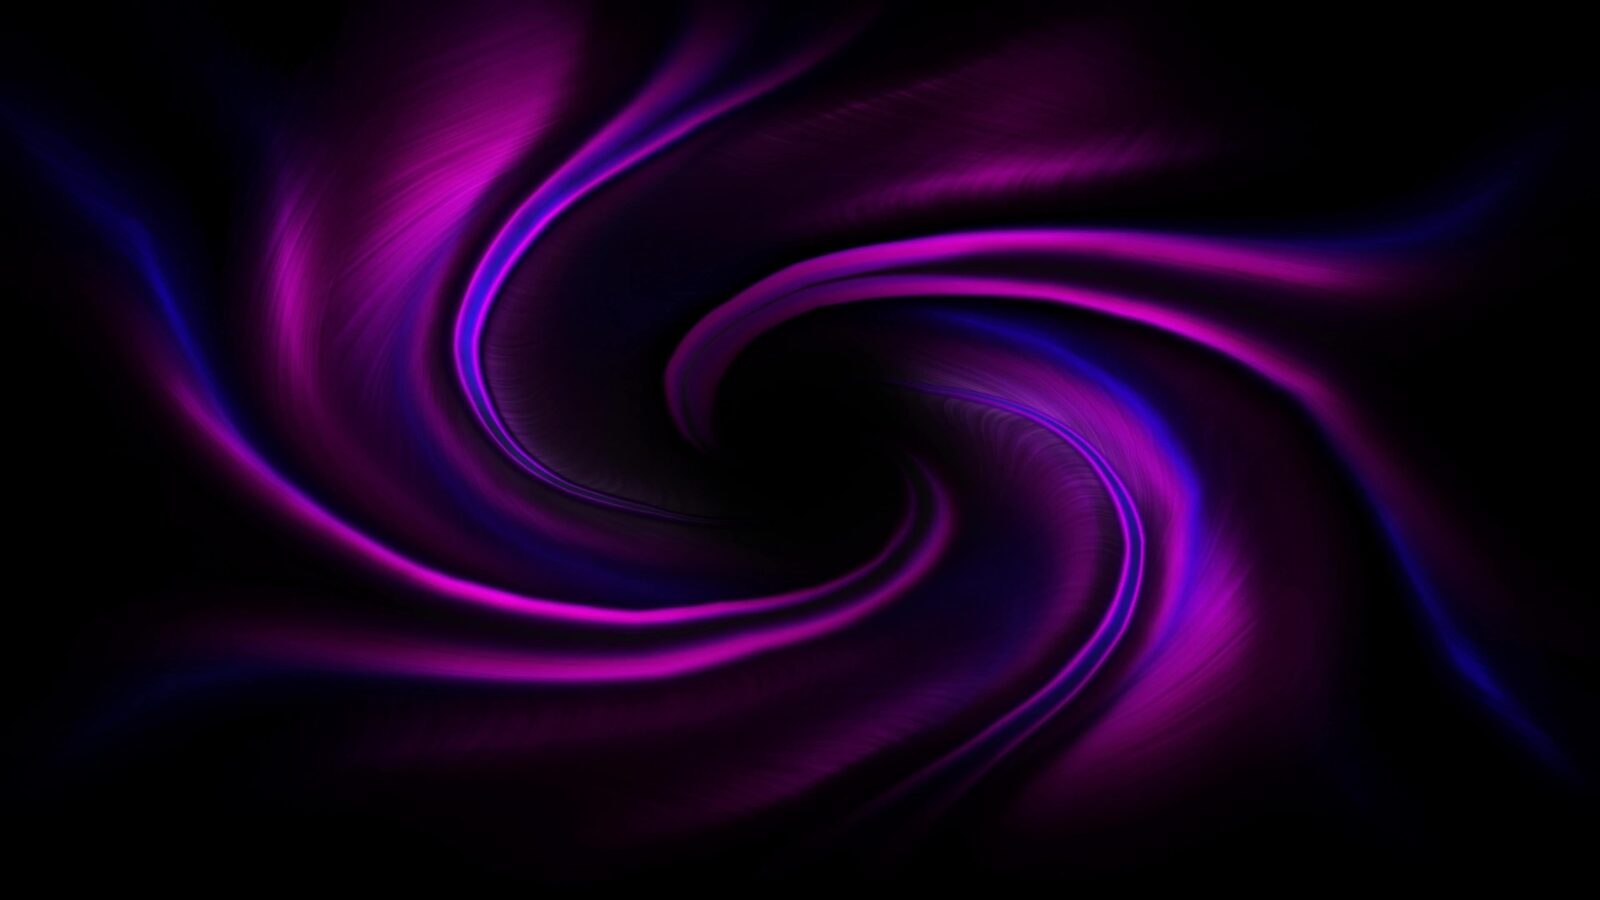 LiveWallpapers4Free.com | Abstract Purple Swirl 4K Artwork - Free Live Wallpaper